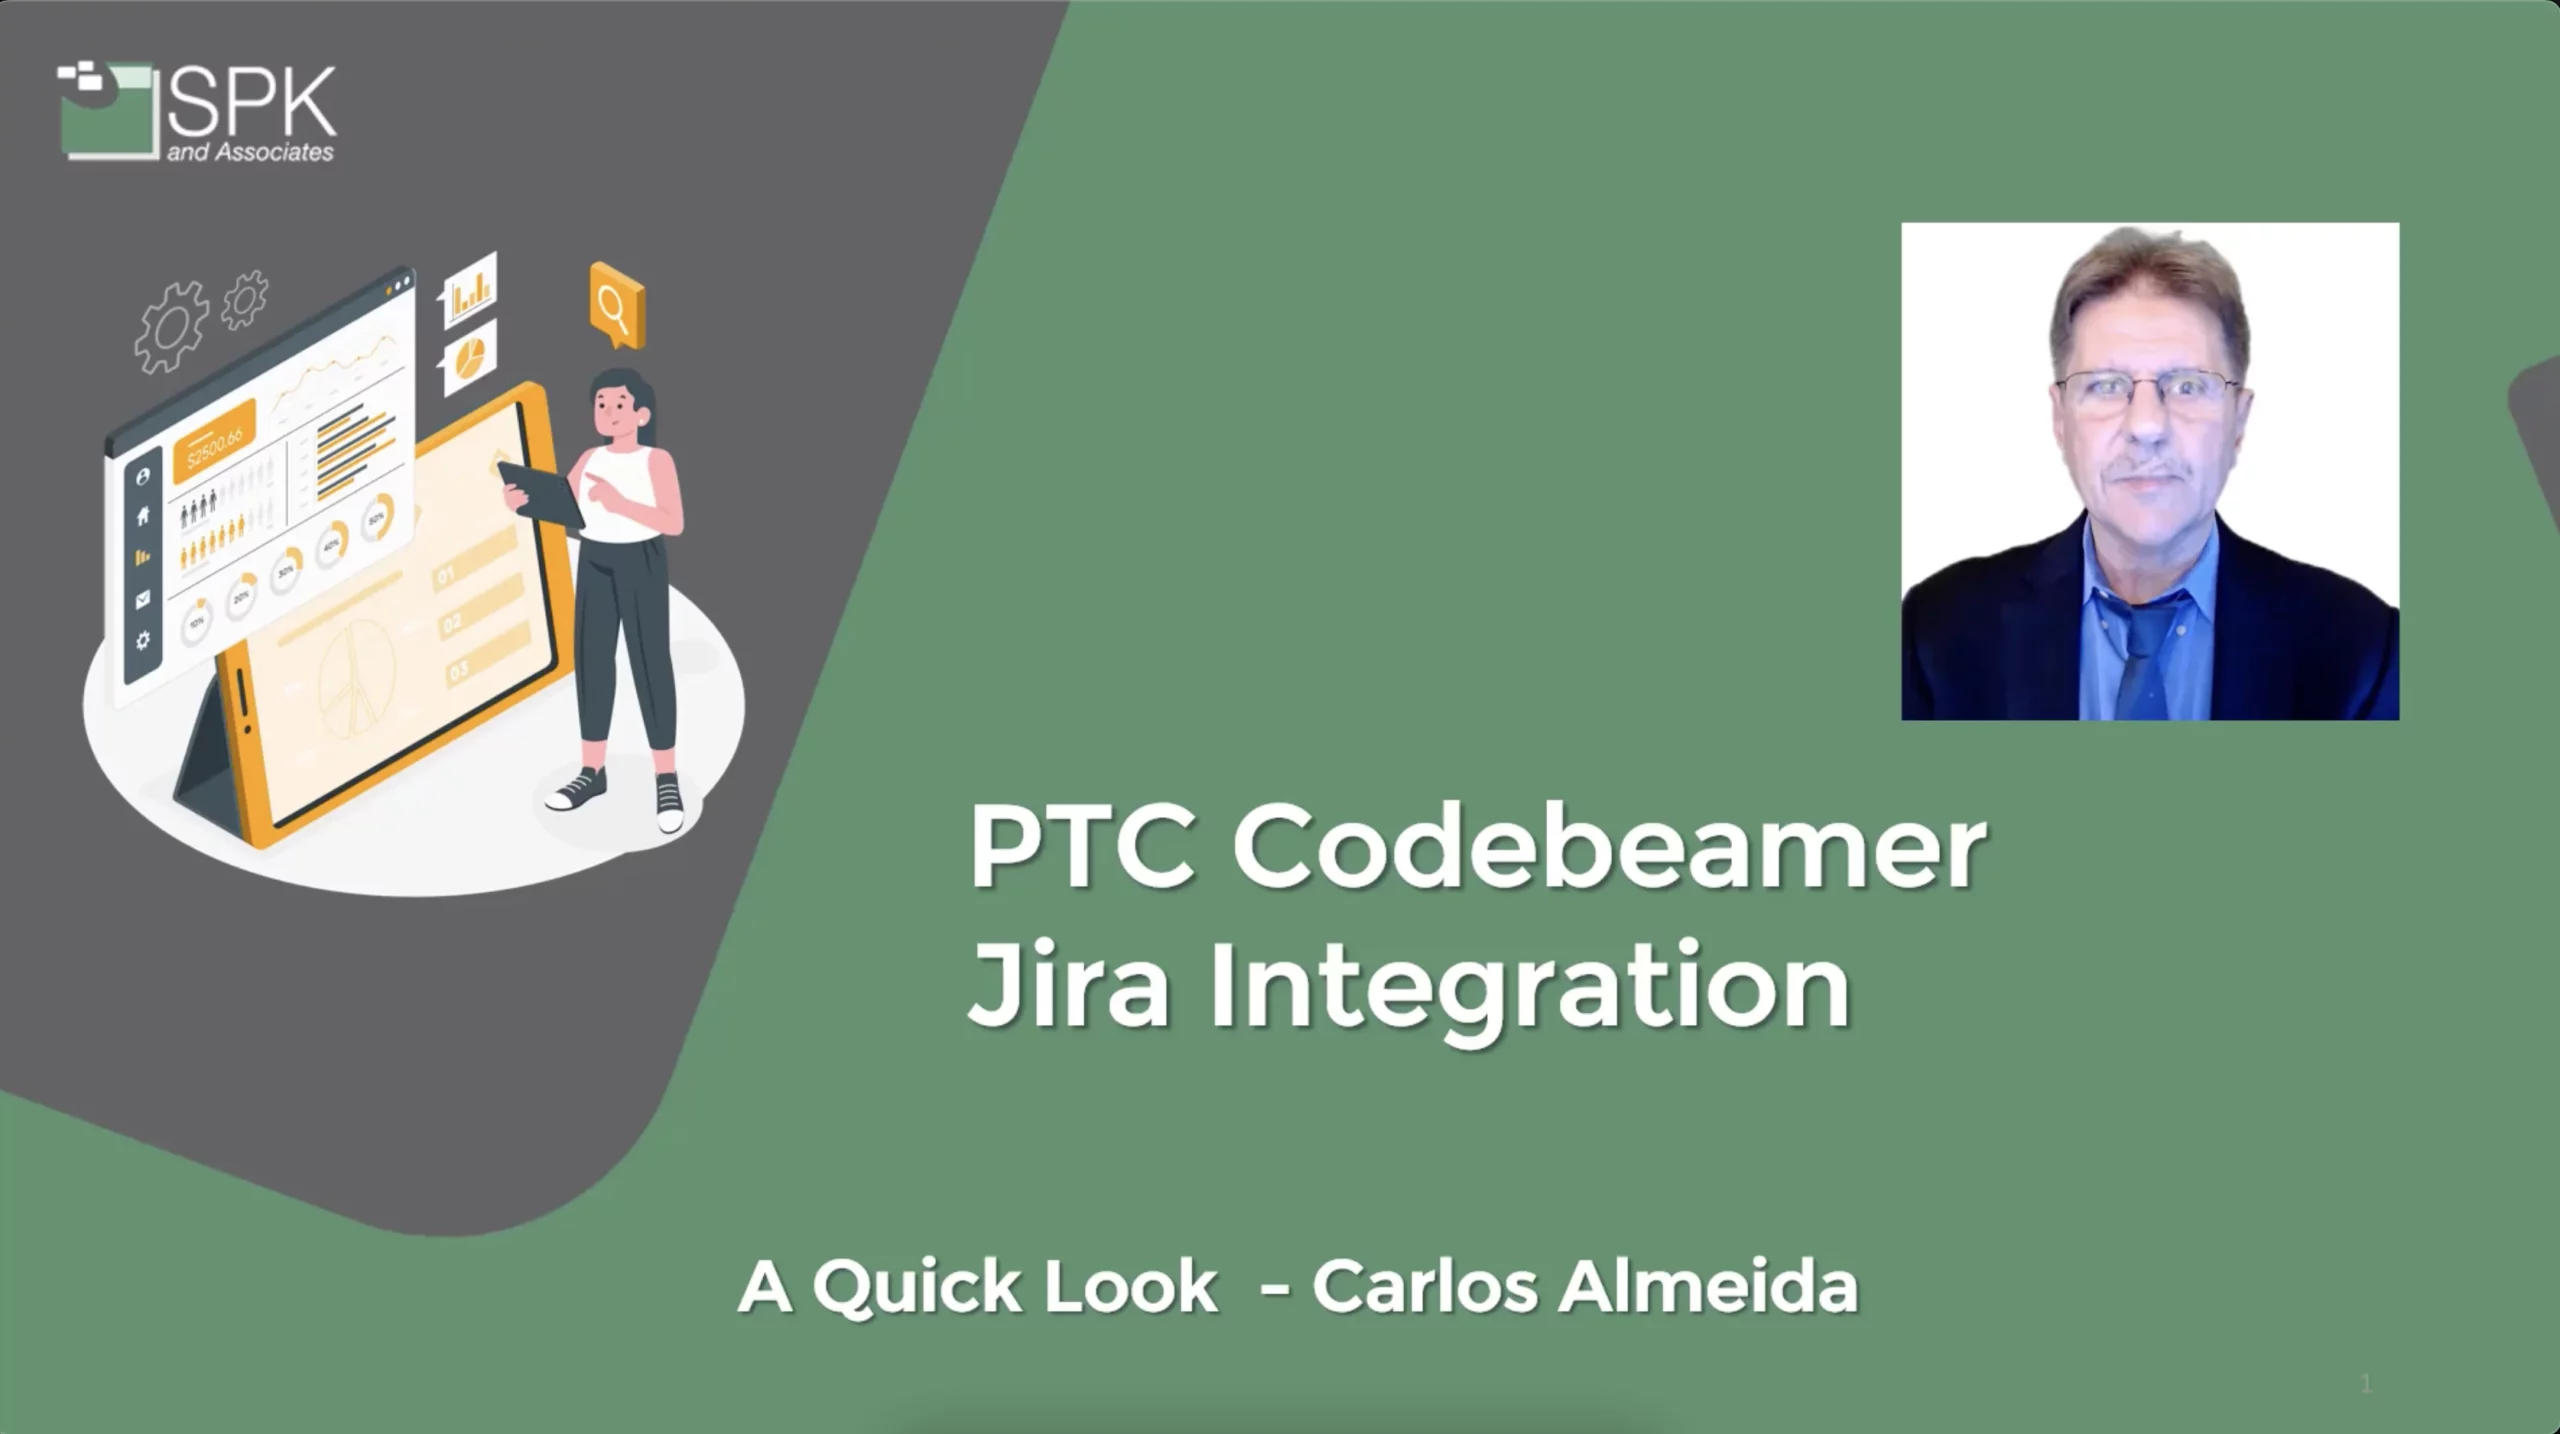 Jira Codebeamer integration